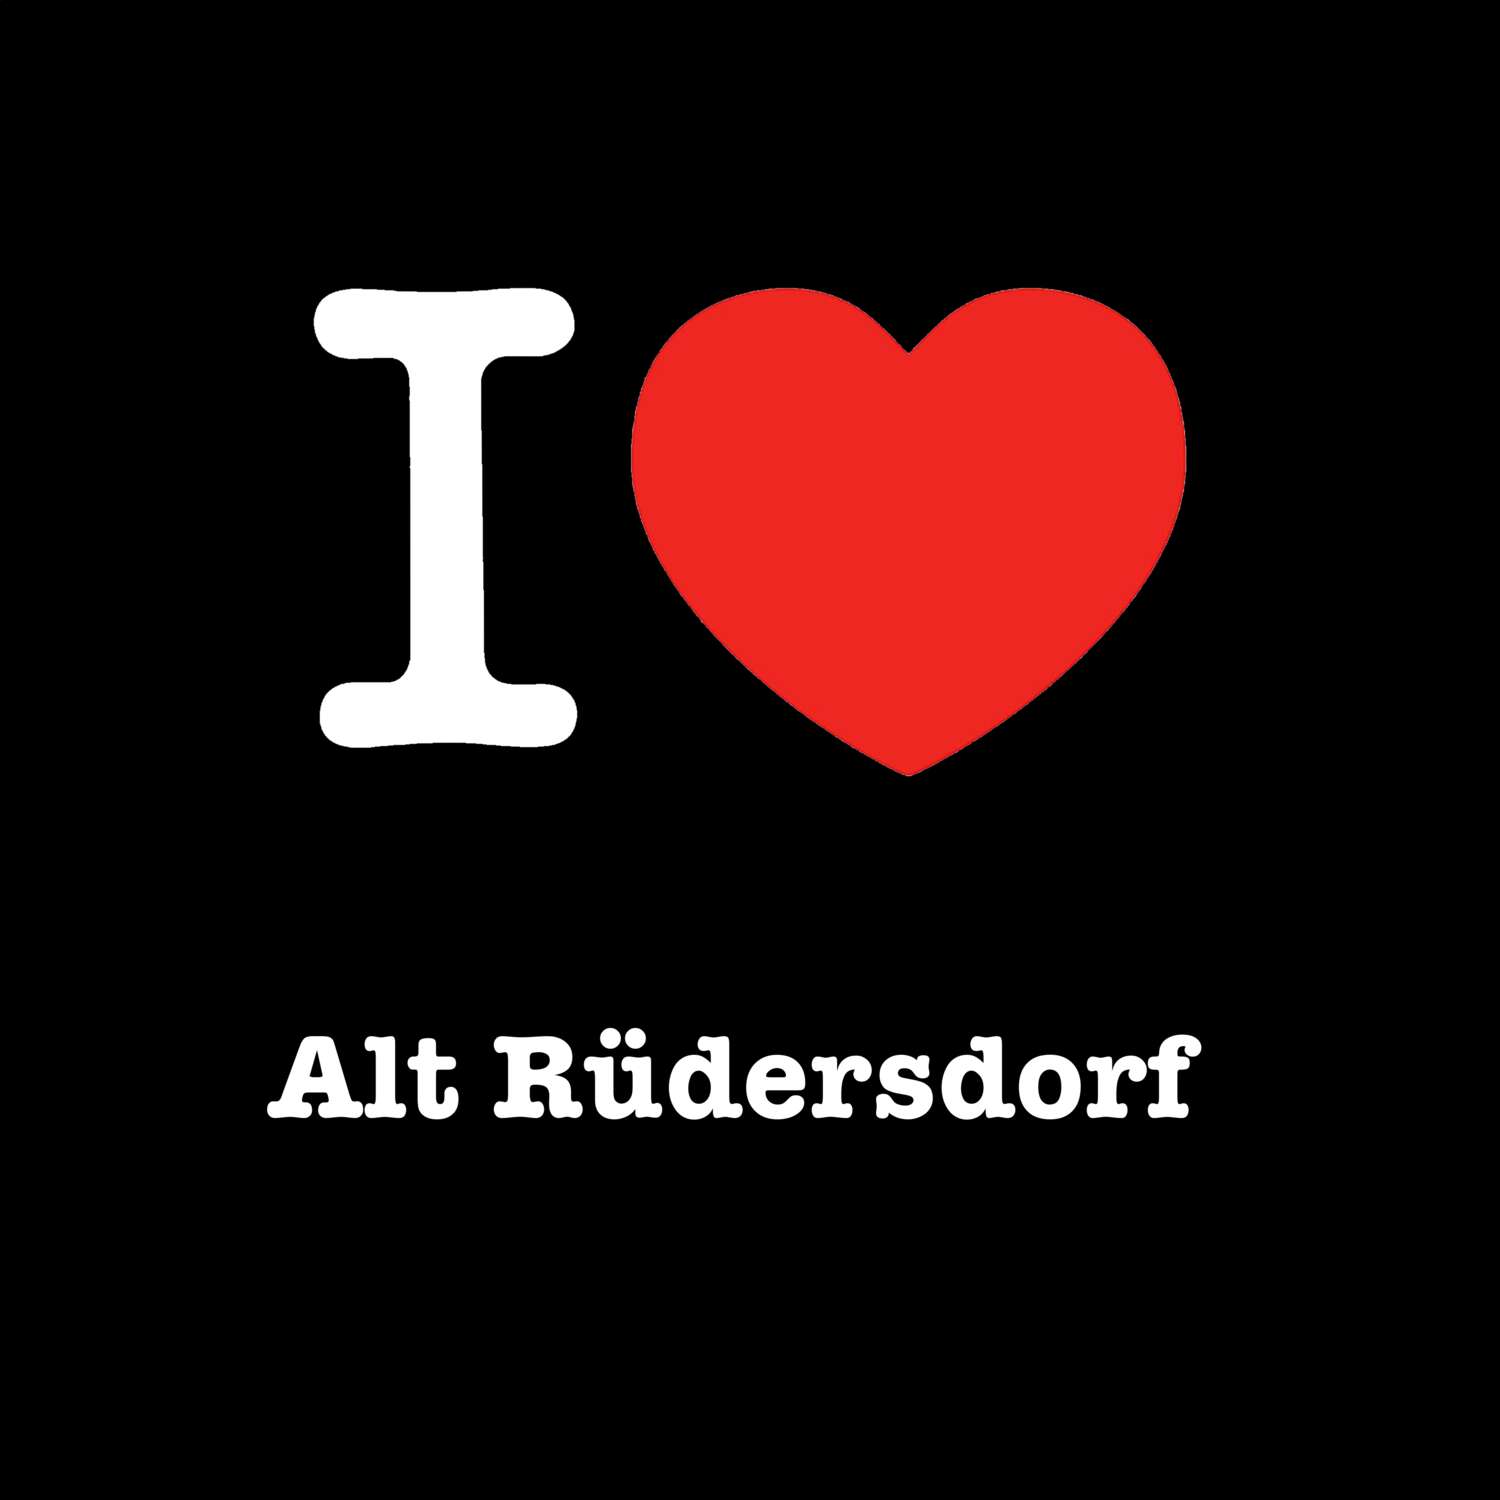 Alt Rüdersdorf T-Shirt »I love«